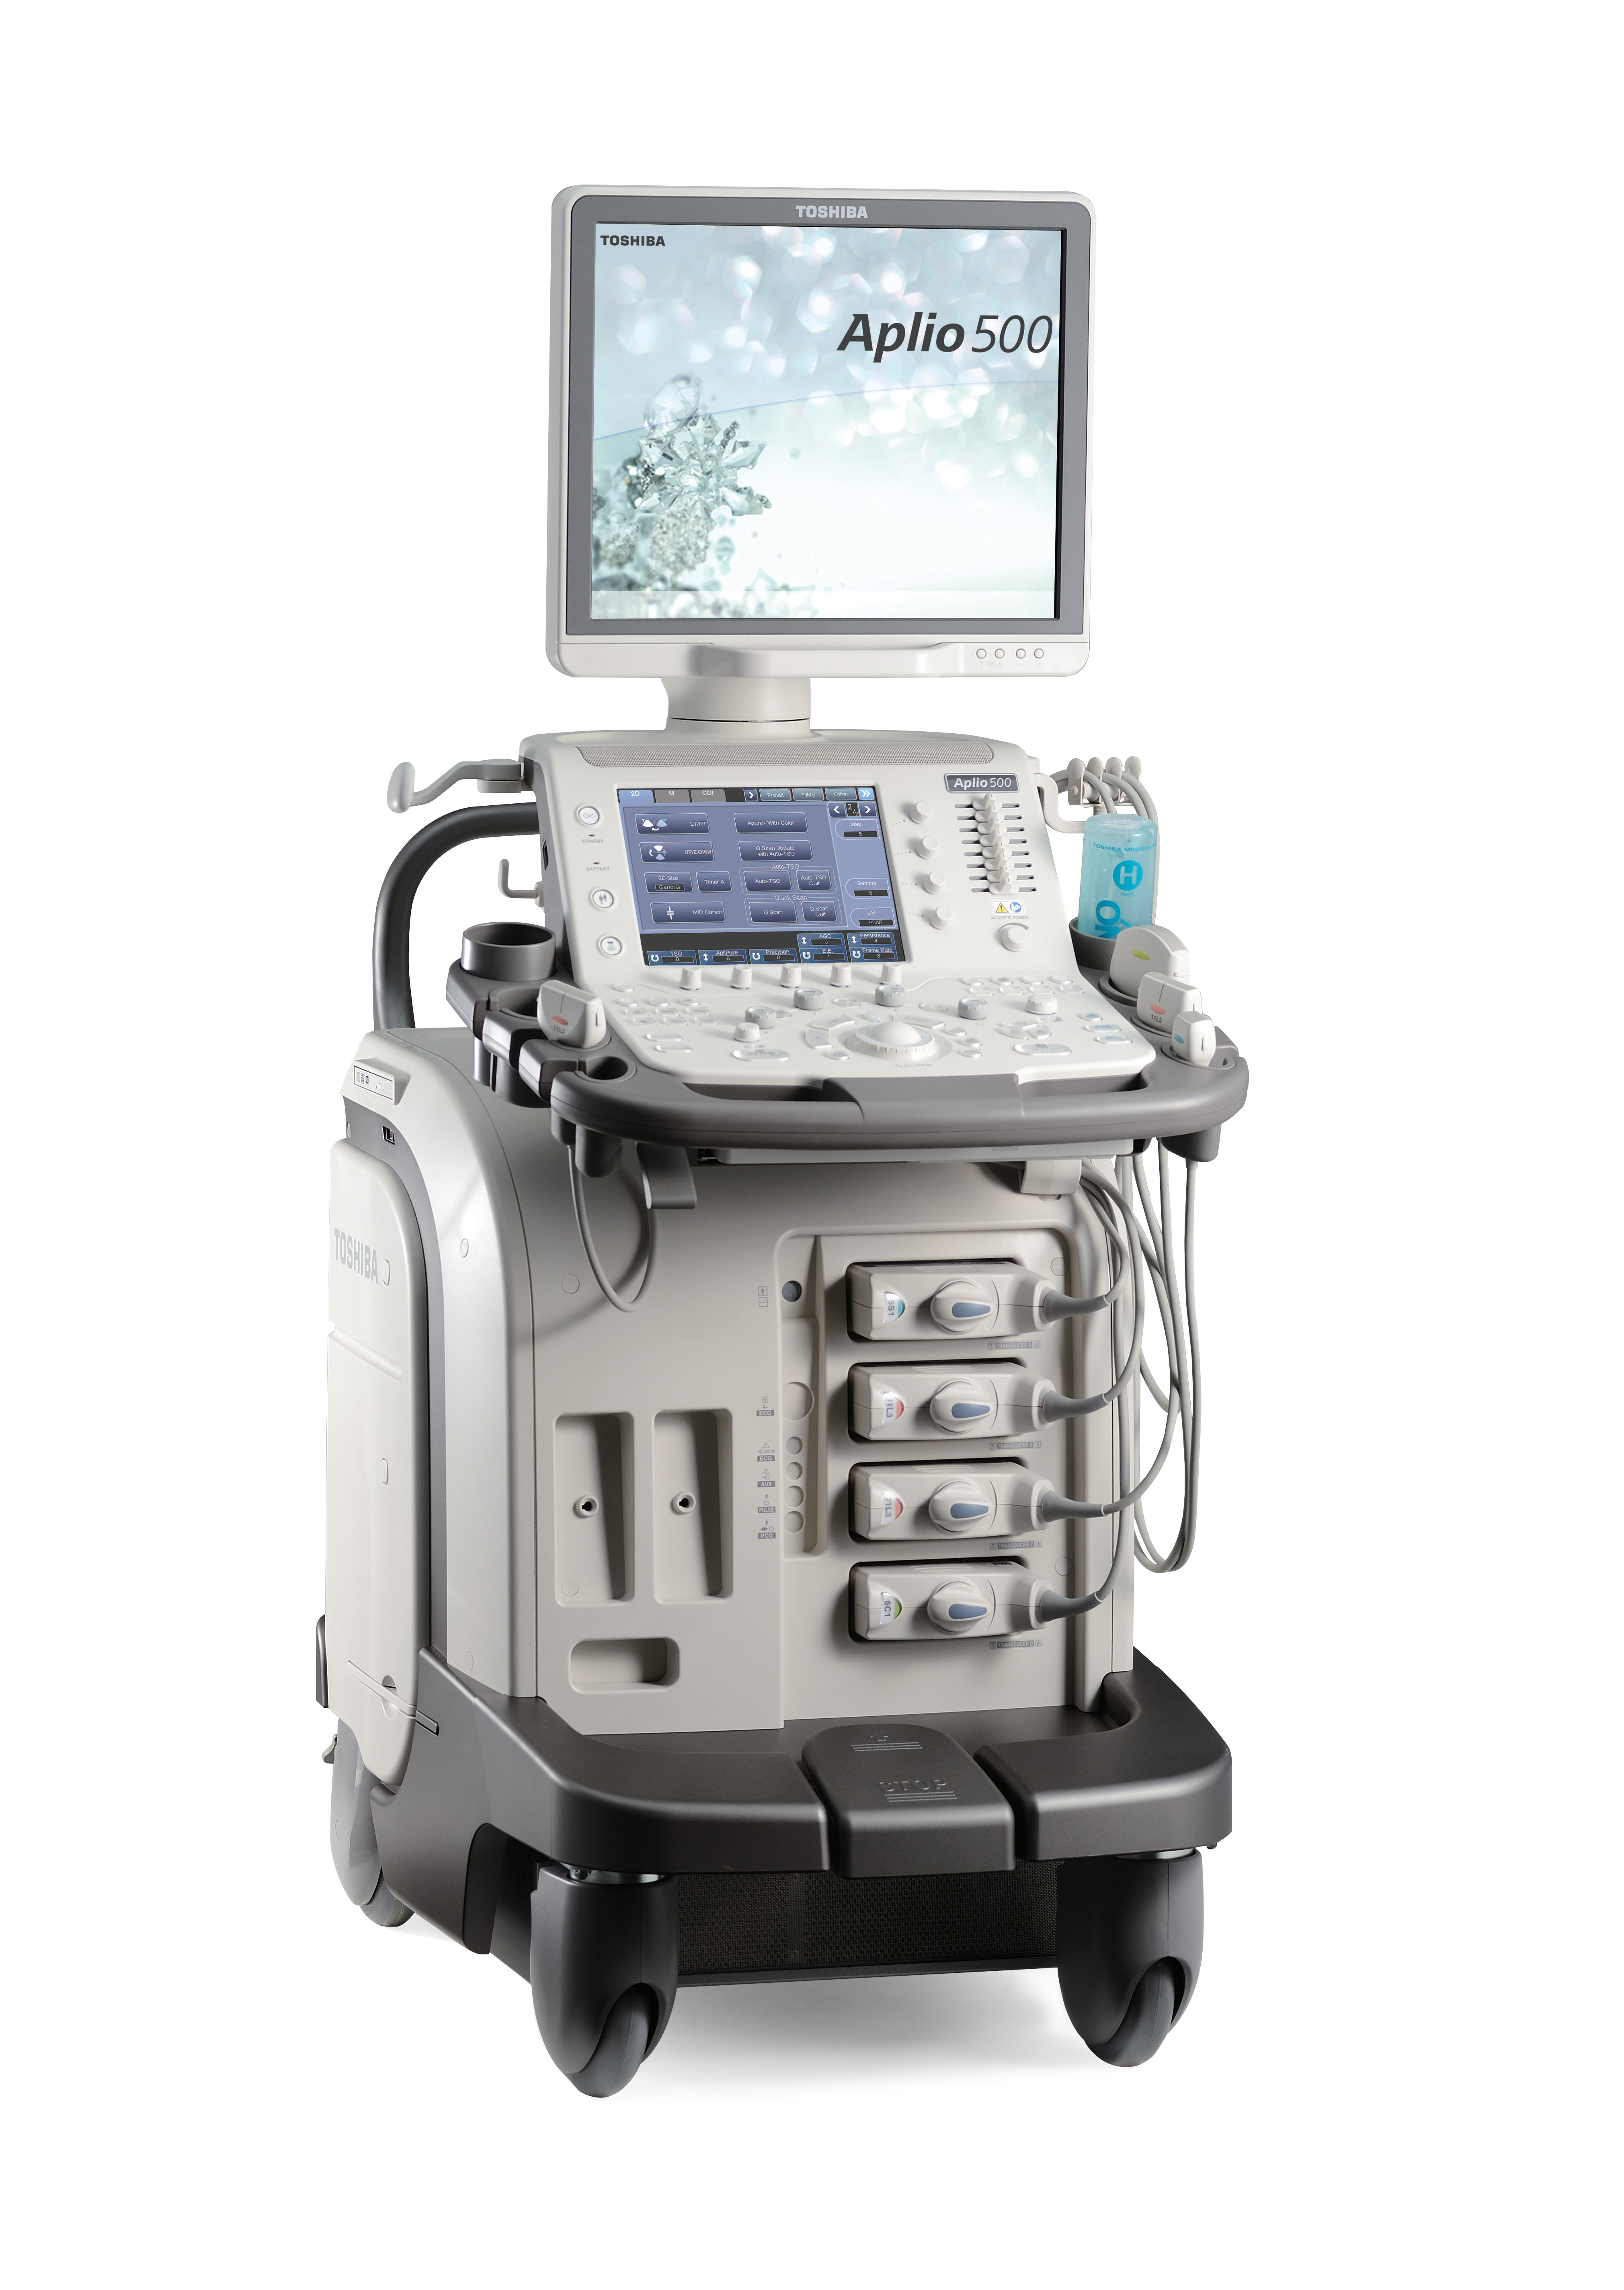 Image: The Aplio 500 Platinum ultrasound system (Photo courtesy of Toshiba Medical Systems).